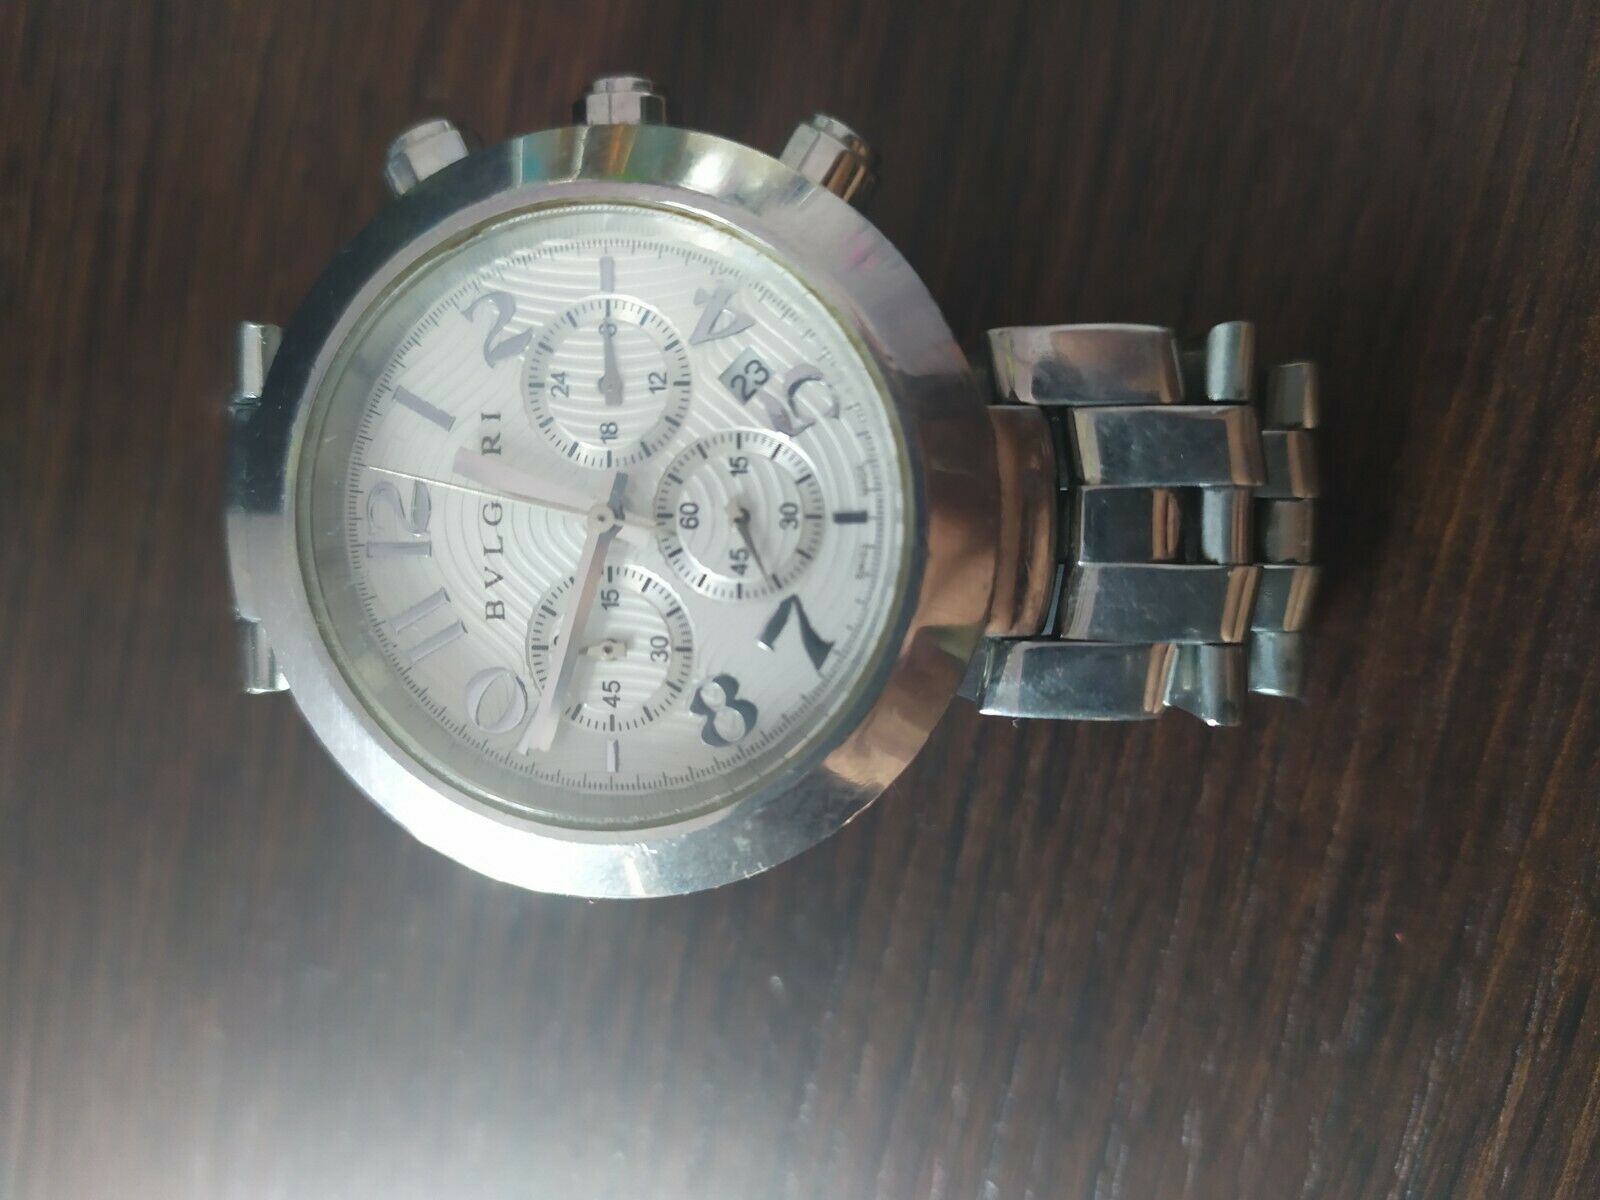 Bvlgari bv 20 sw g 2286 vintage watch 